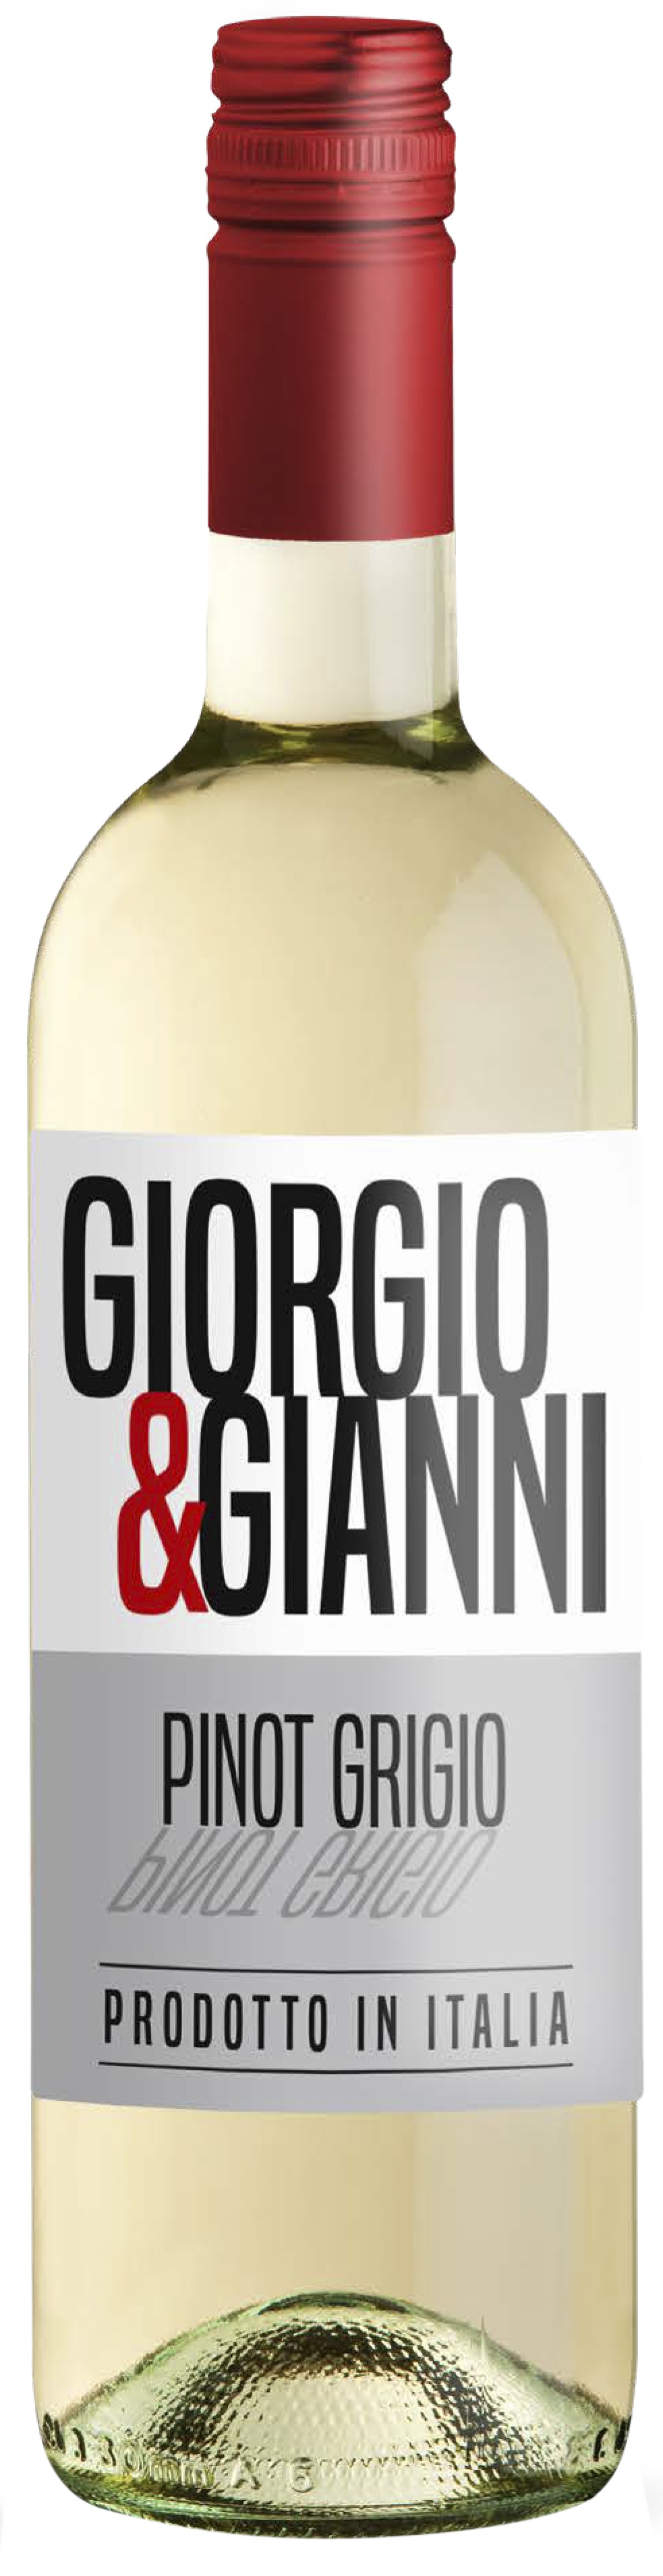 47560 Giorgio & Gianni bianco Pinot Grigio 0,75 liter